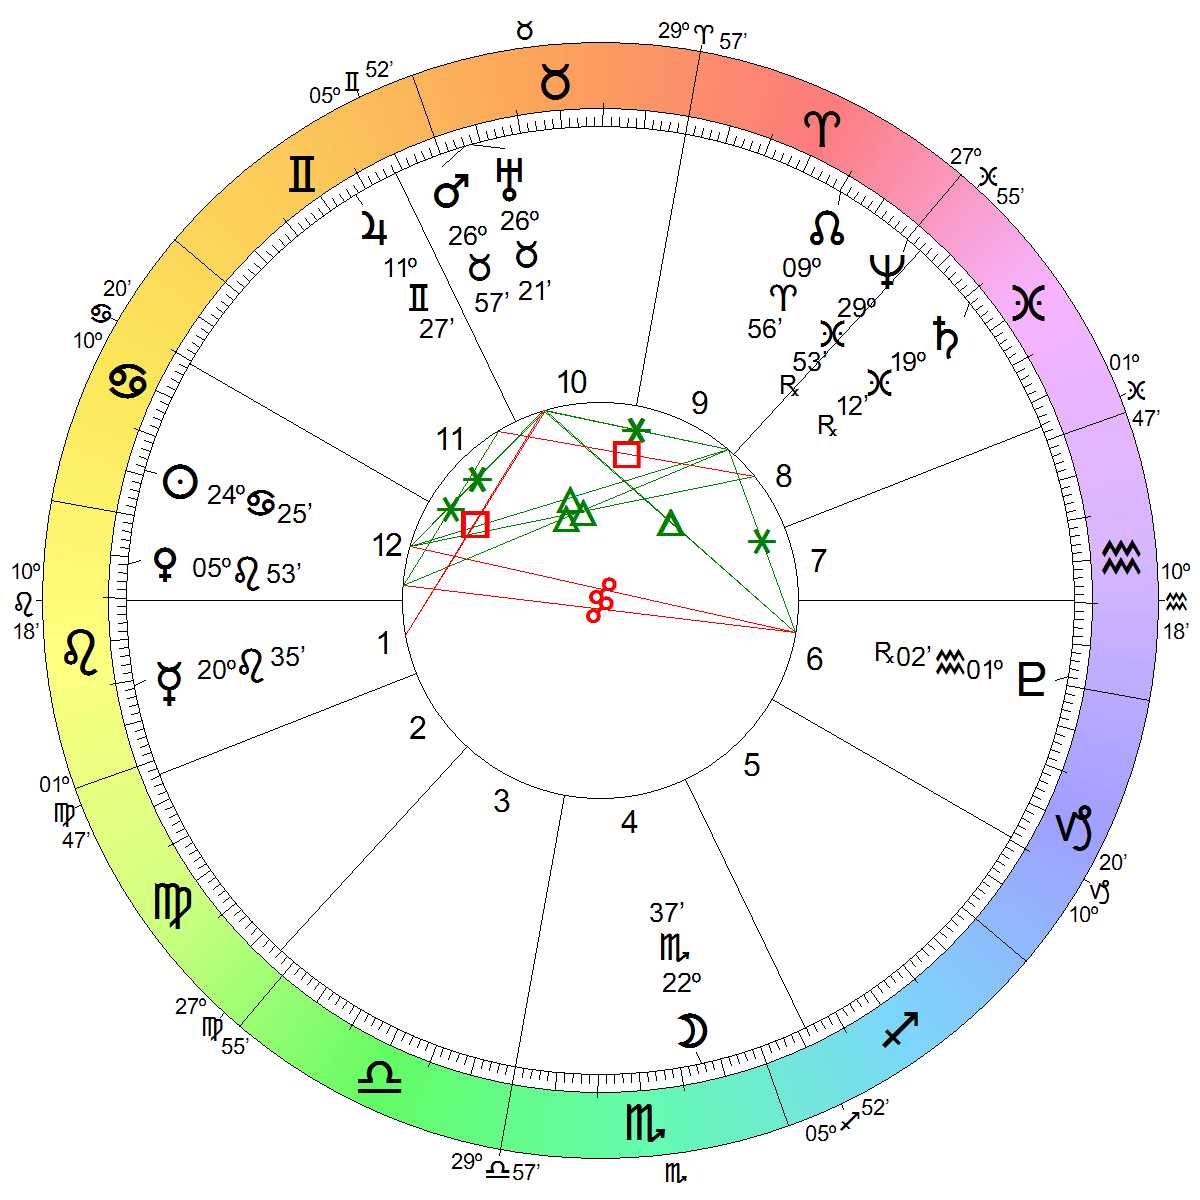 Astrological Chart